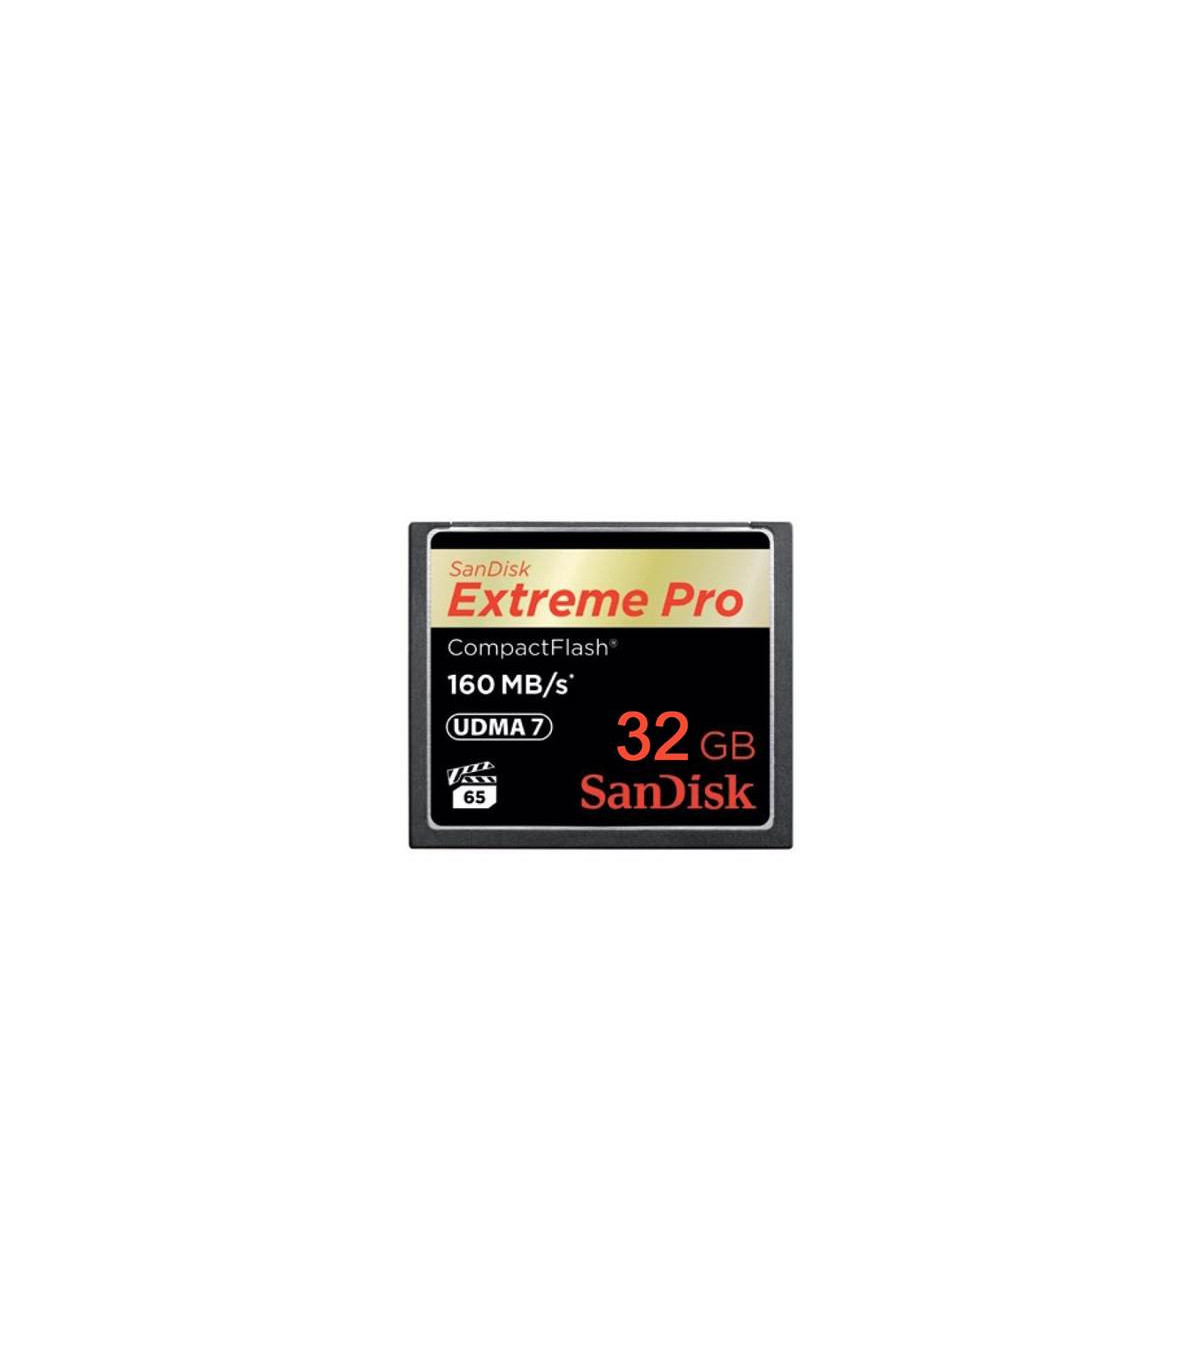 Sandisk carte Compact Flash Extreme Pro (160MB/s) 32GO - Prophot